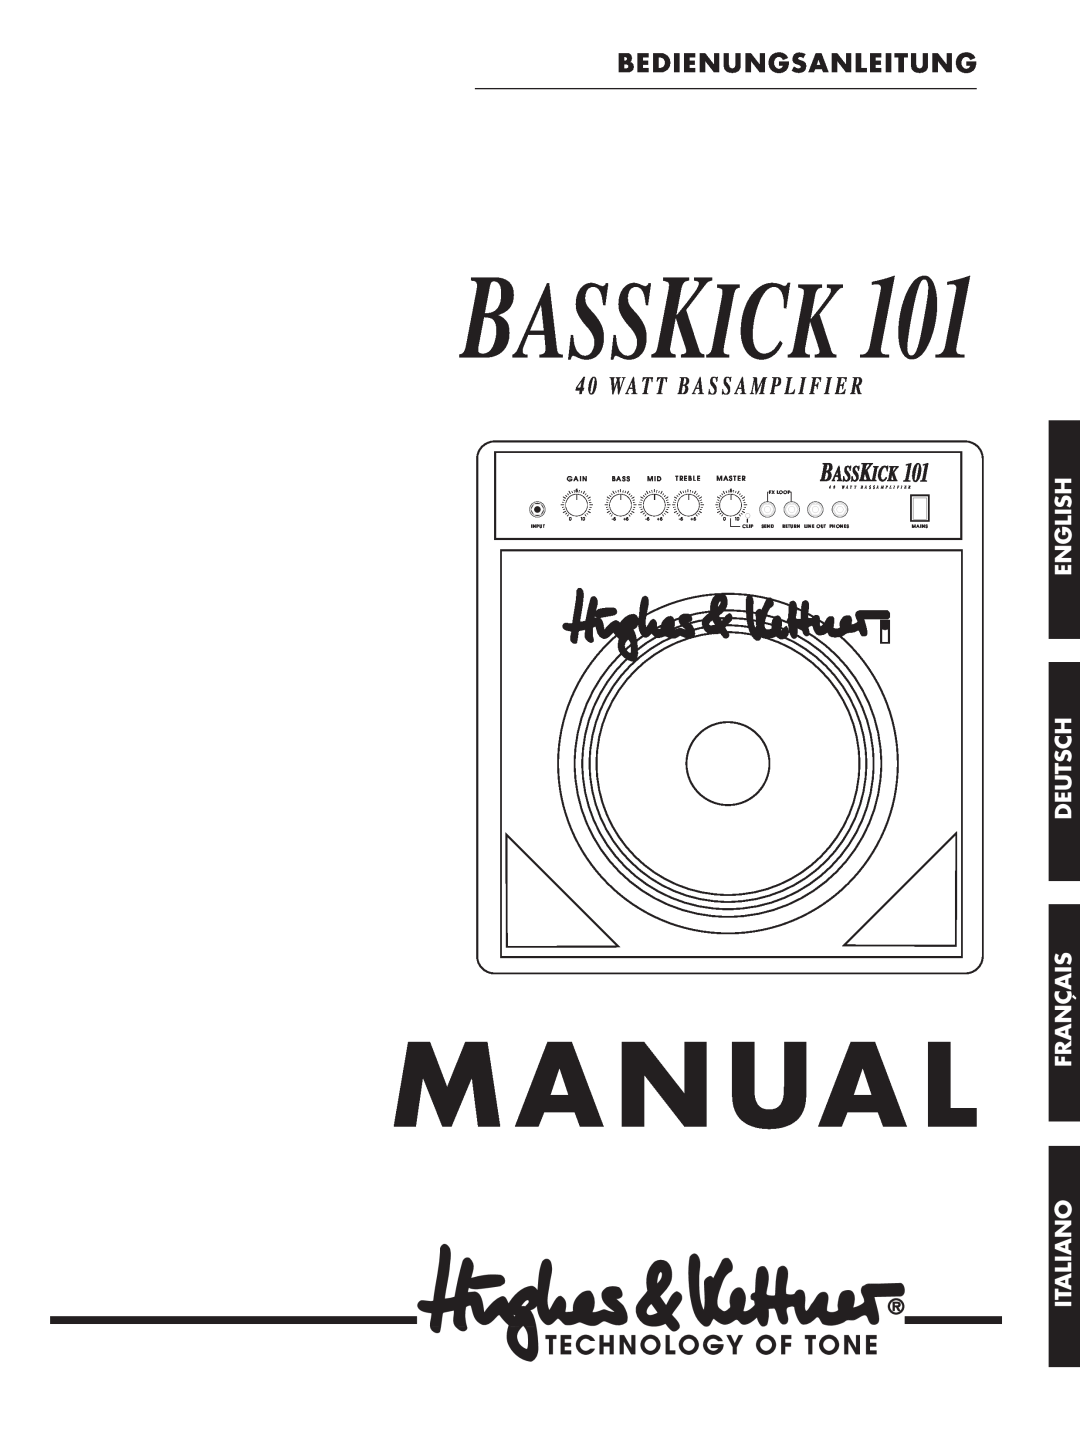 Hughes & Kettner Bass Kick 101 manual 4 0 WA T T B A S S A M P L I F I E R, English Deutsch, Français, Italiano, Manua L 